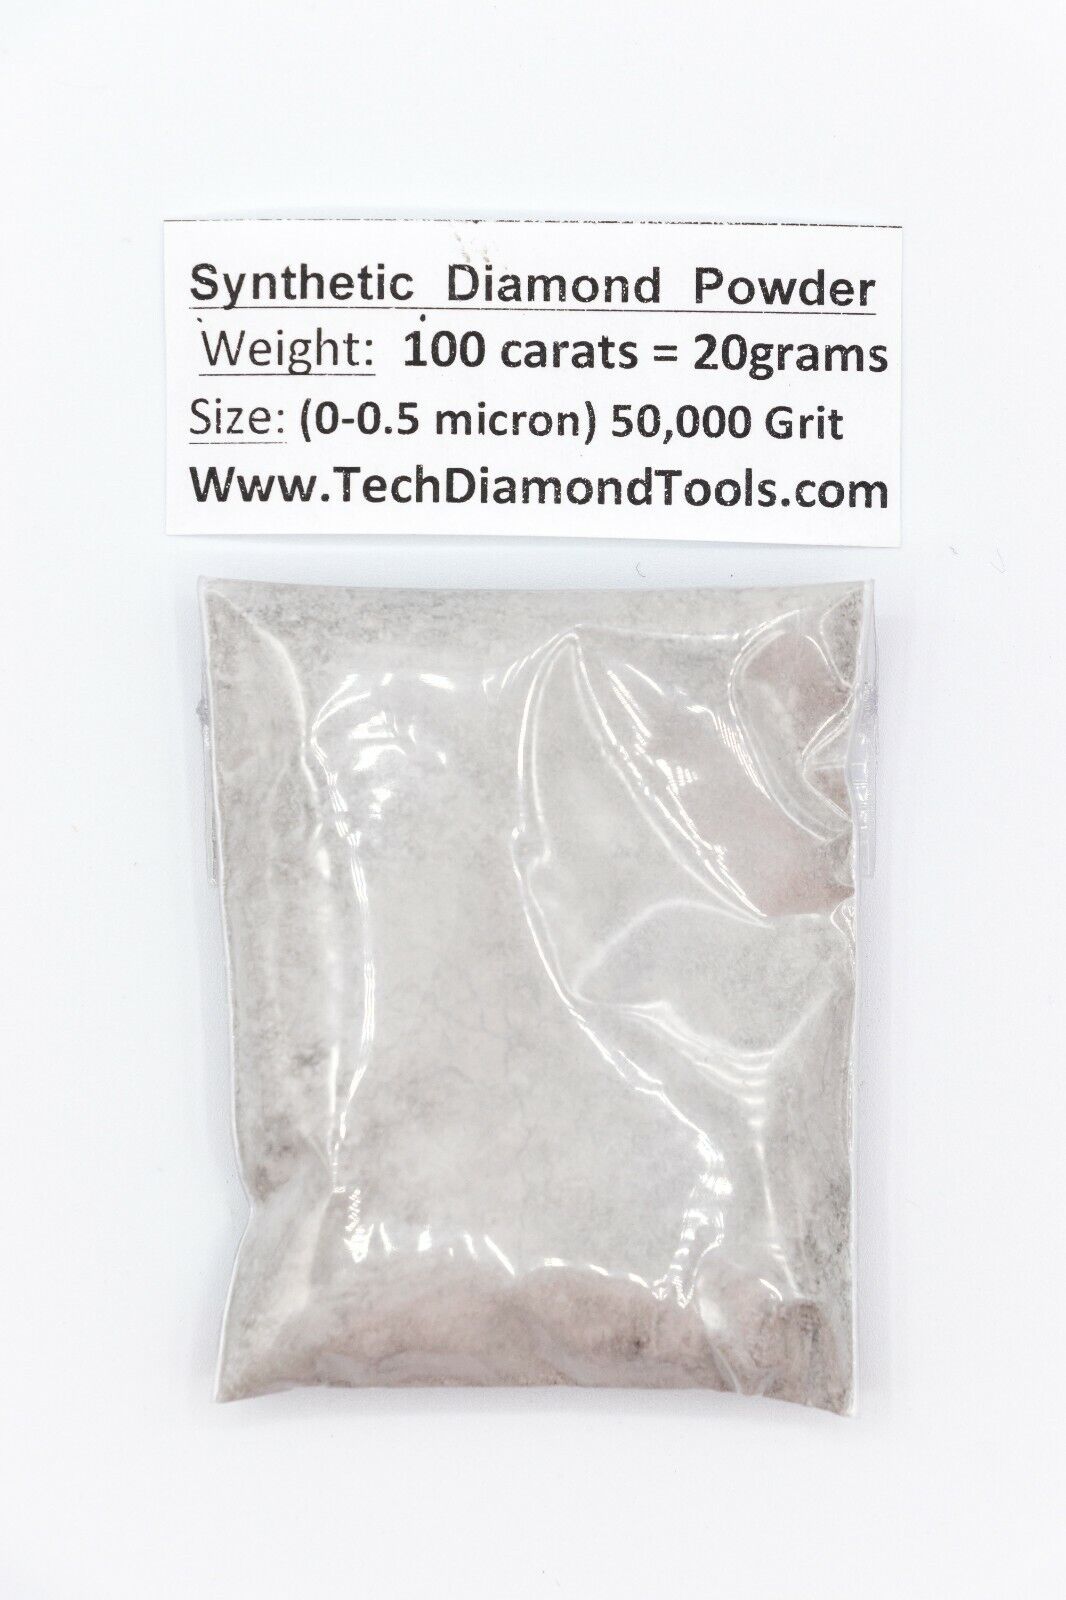 Diamond Micron Powder 50.000 Grit Mesh (0-0.5 Micron) Weight 100 Carat = 20 Gram